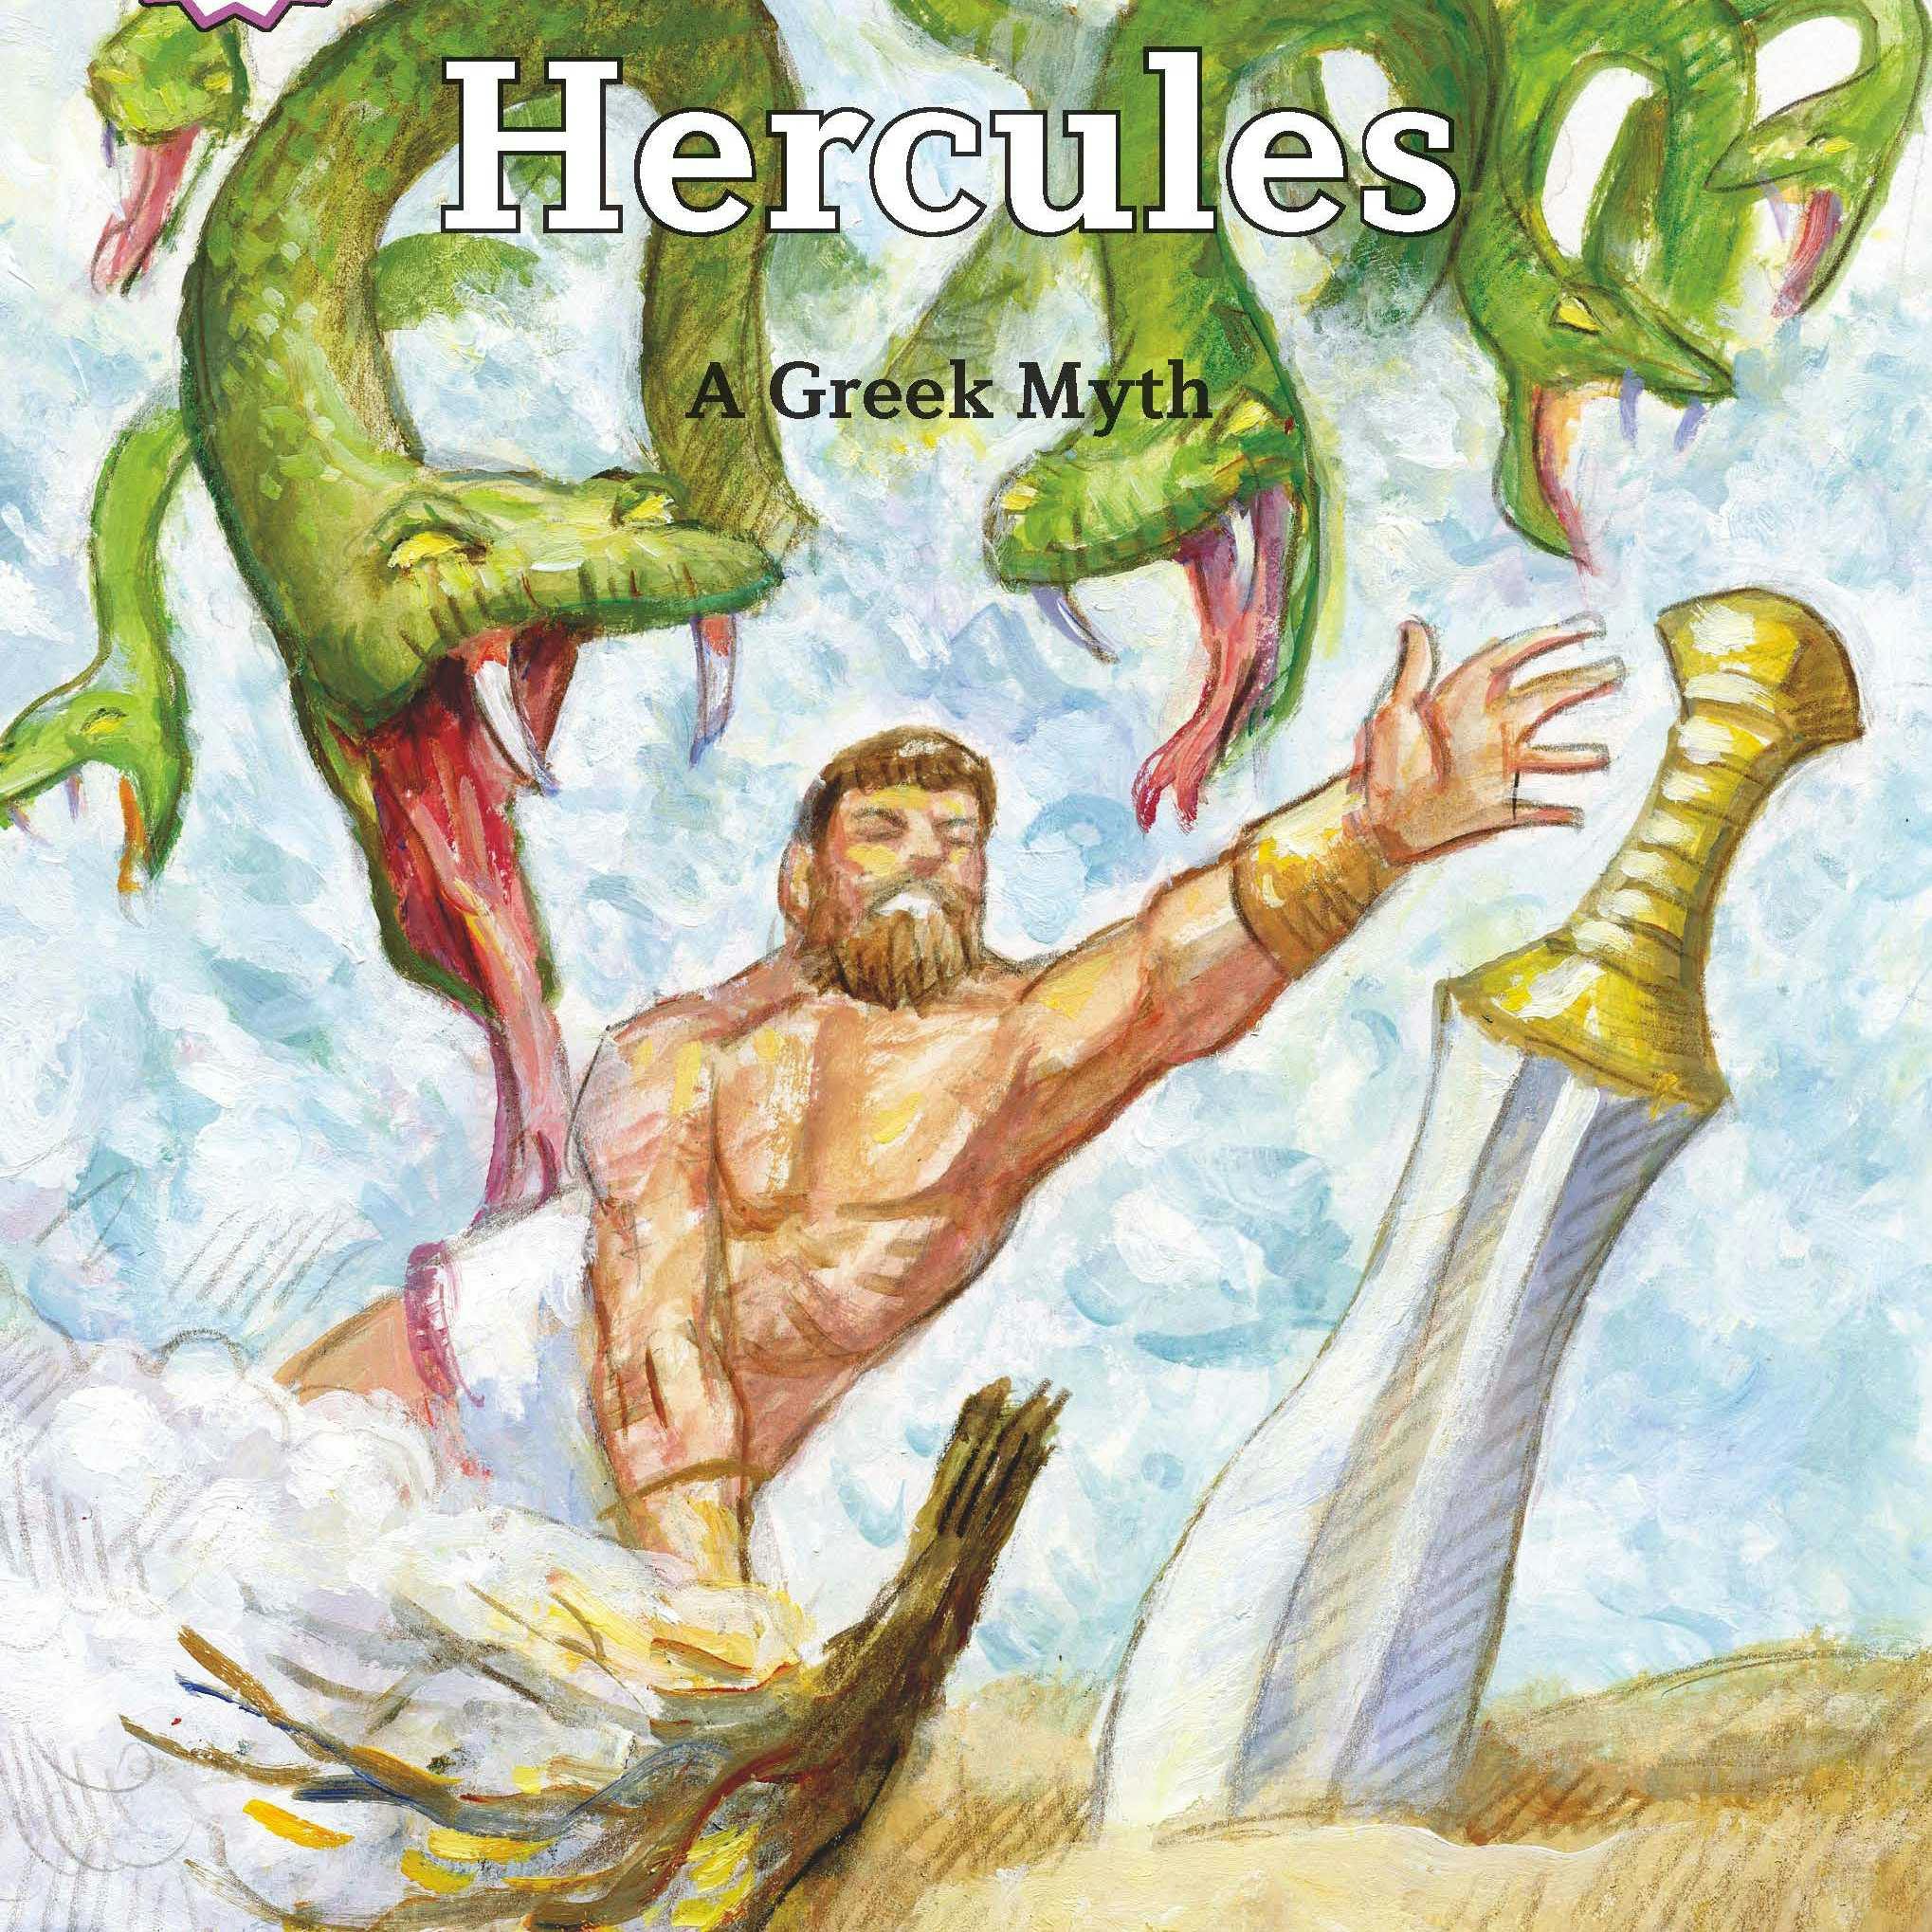 Hercules - A Greek Myth